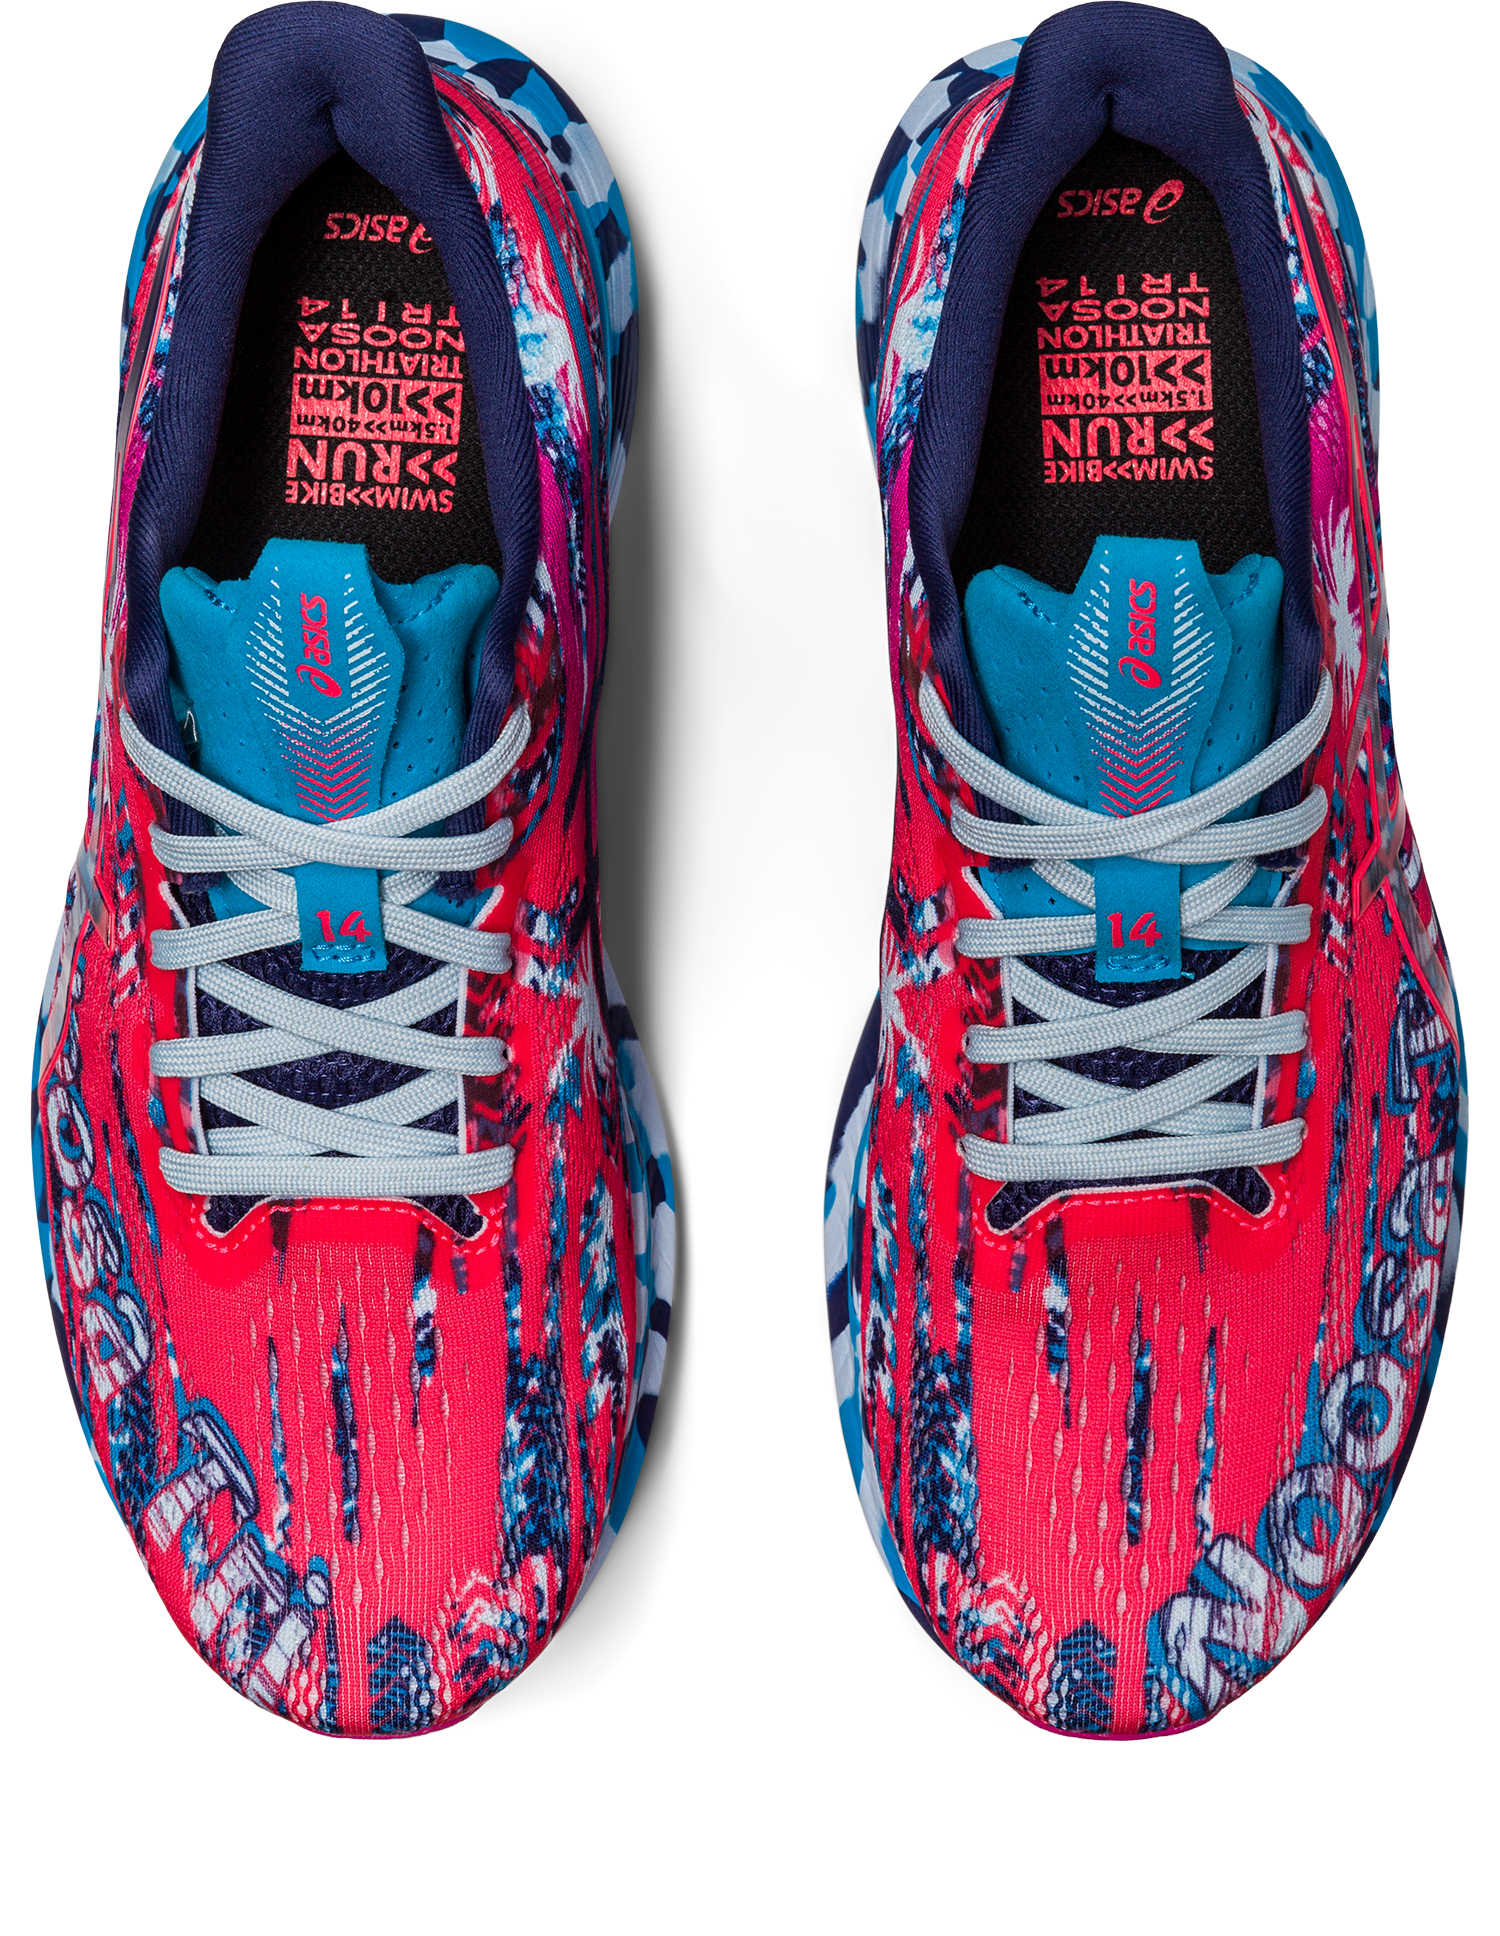 Asics Women's Gel-Noosa Tri 14 Running Shoes in Diva Pink/Indigo Blue